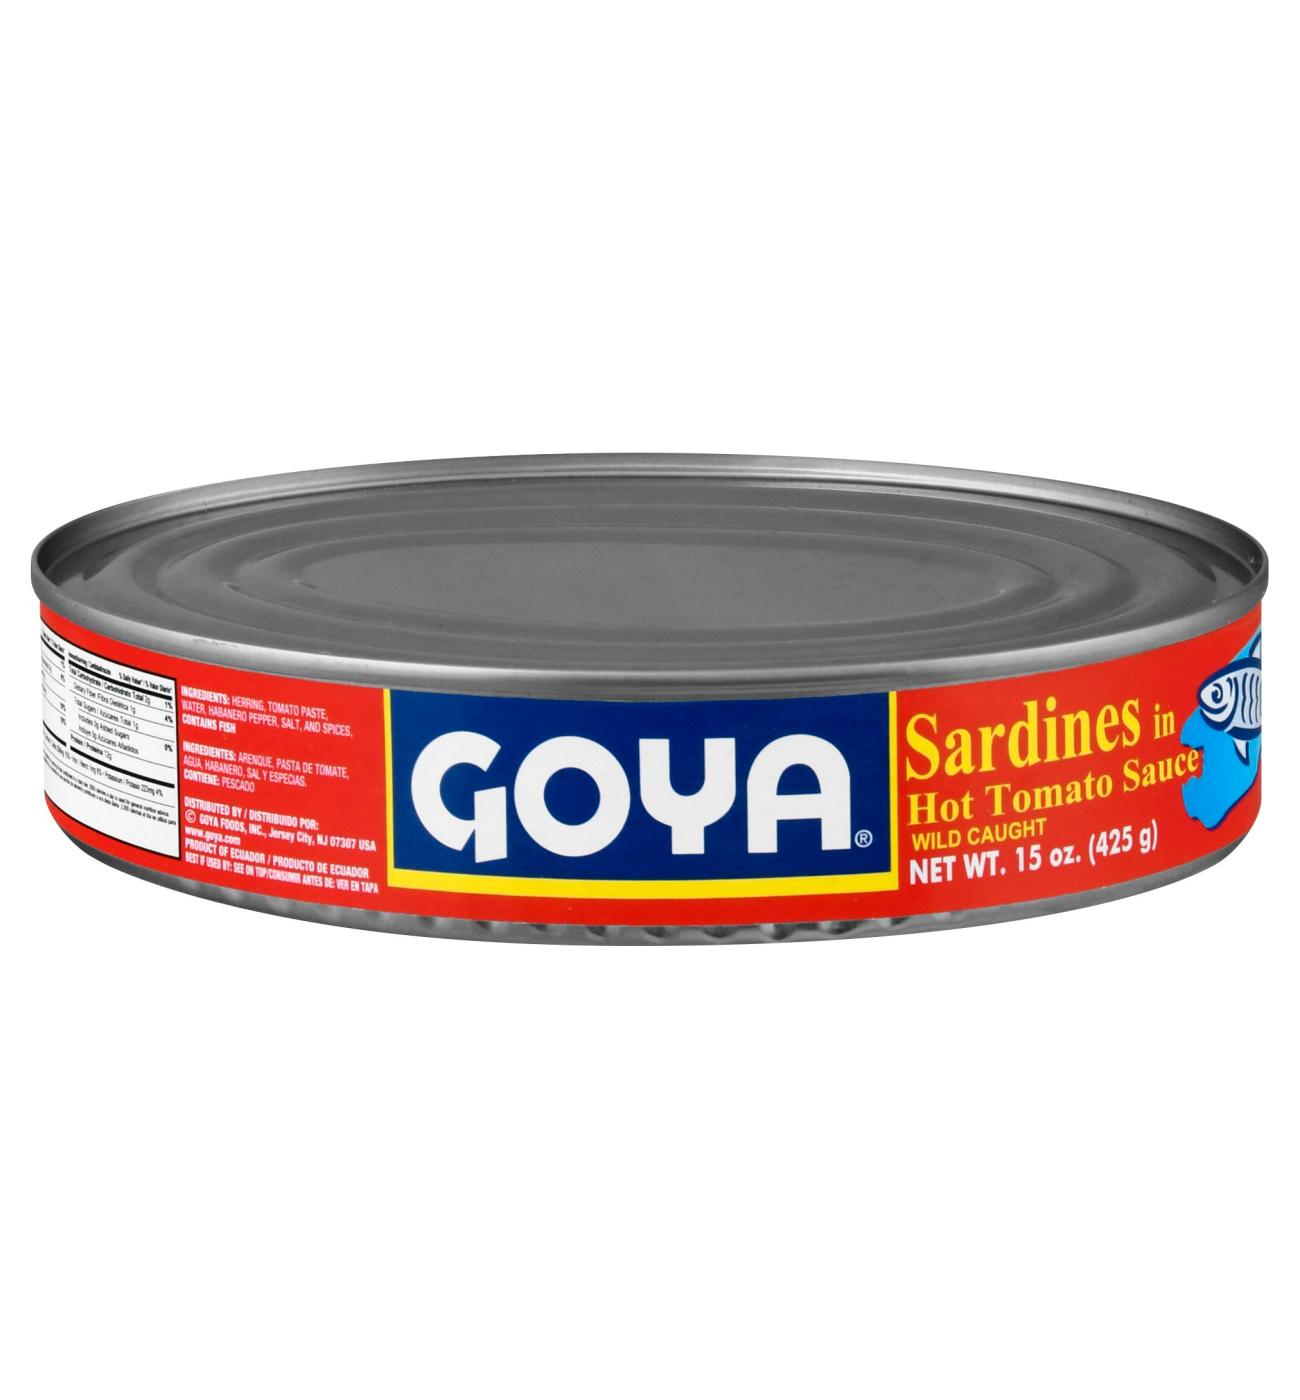 Goya Sardines in Hot Tomato Sauce; image 1 of 2